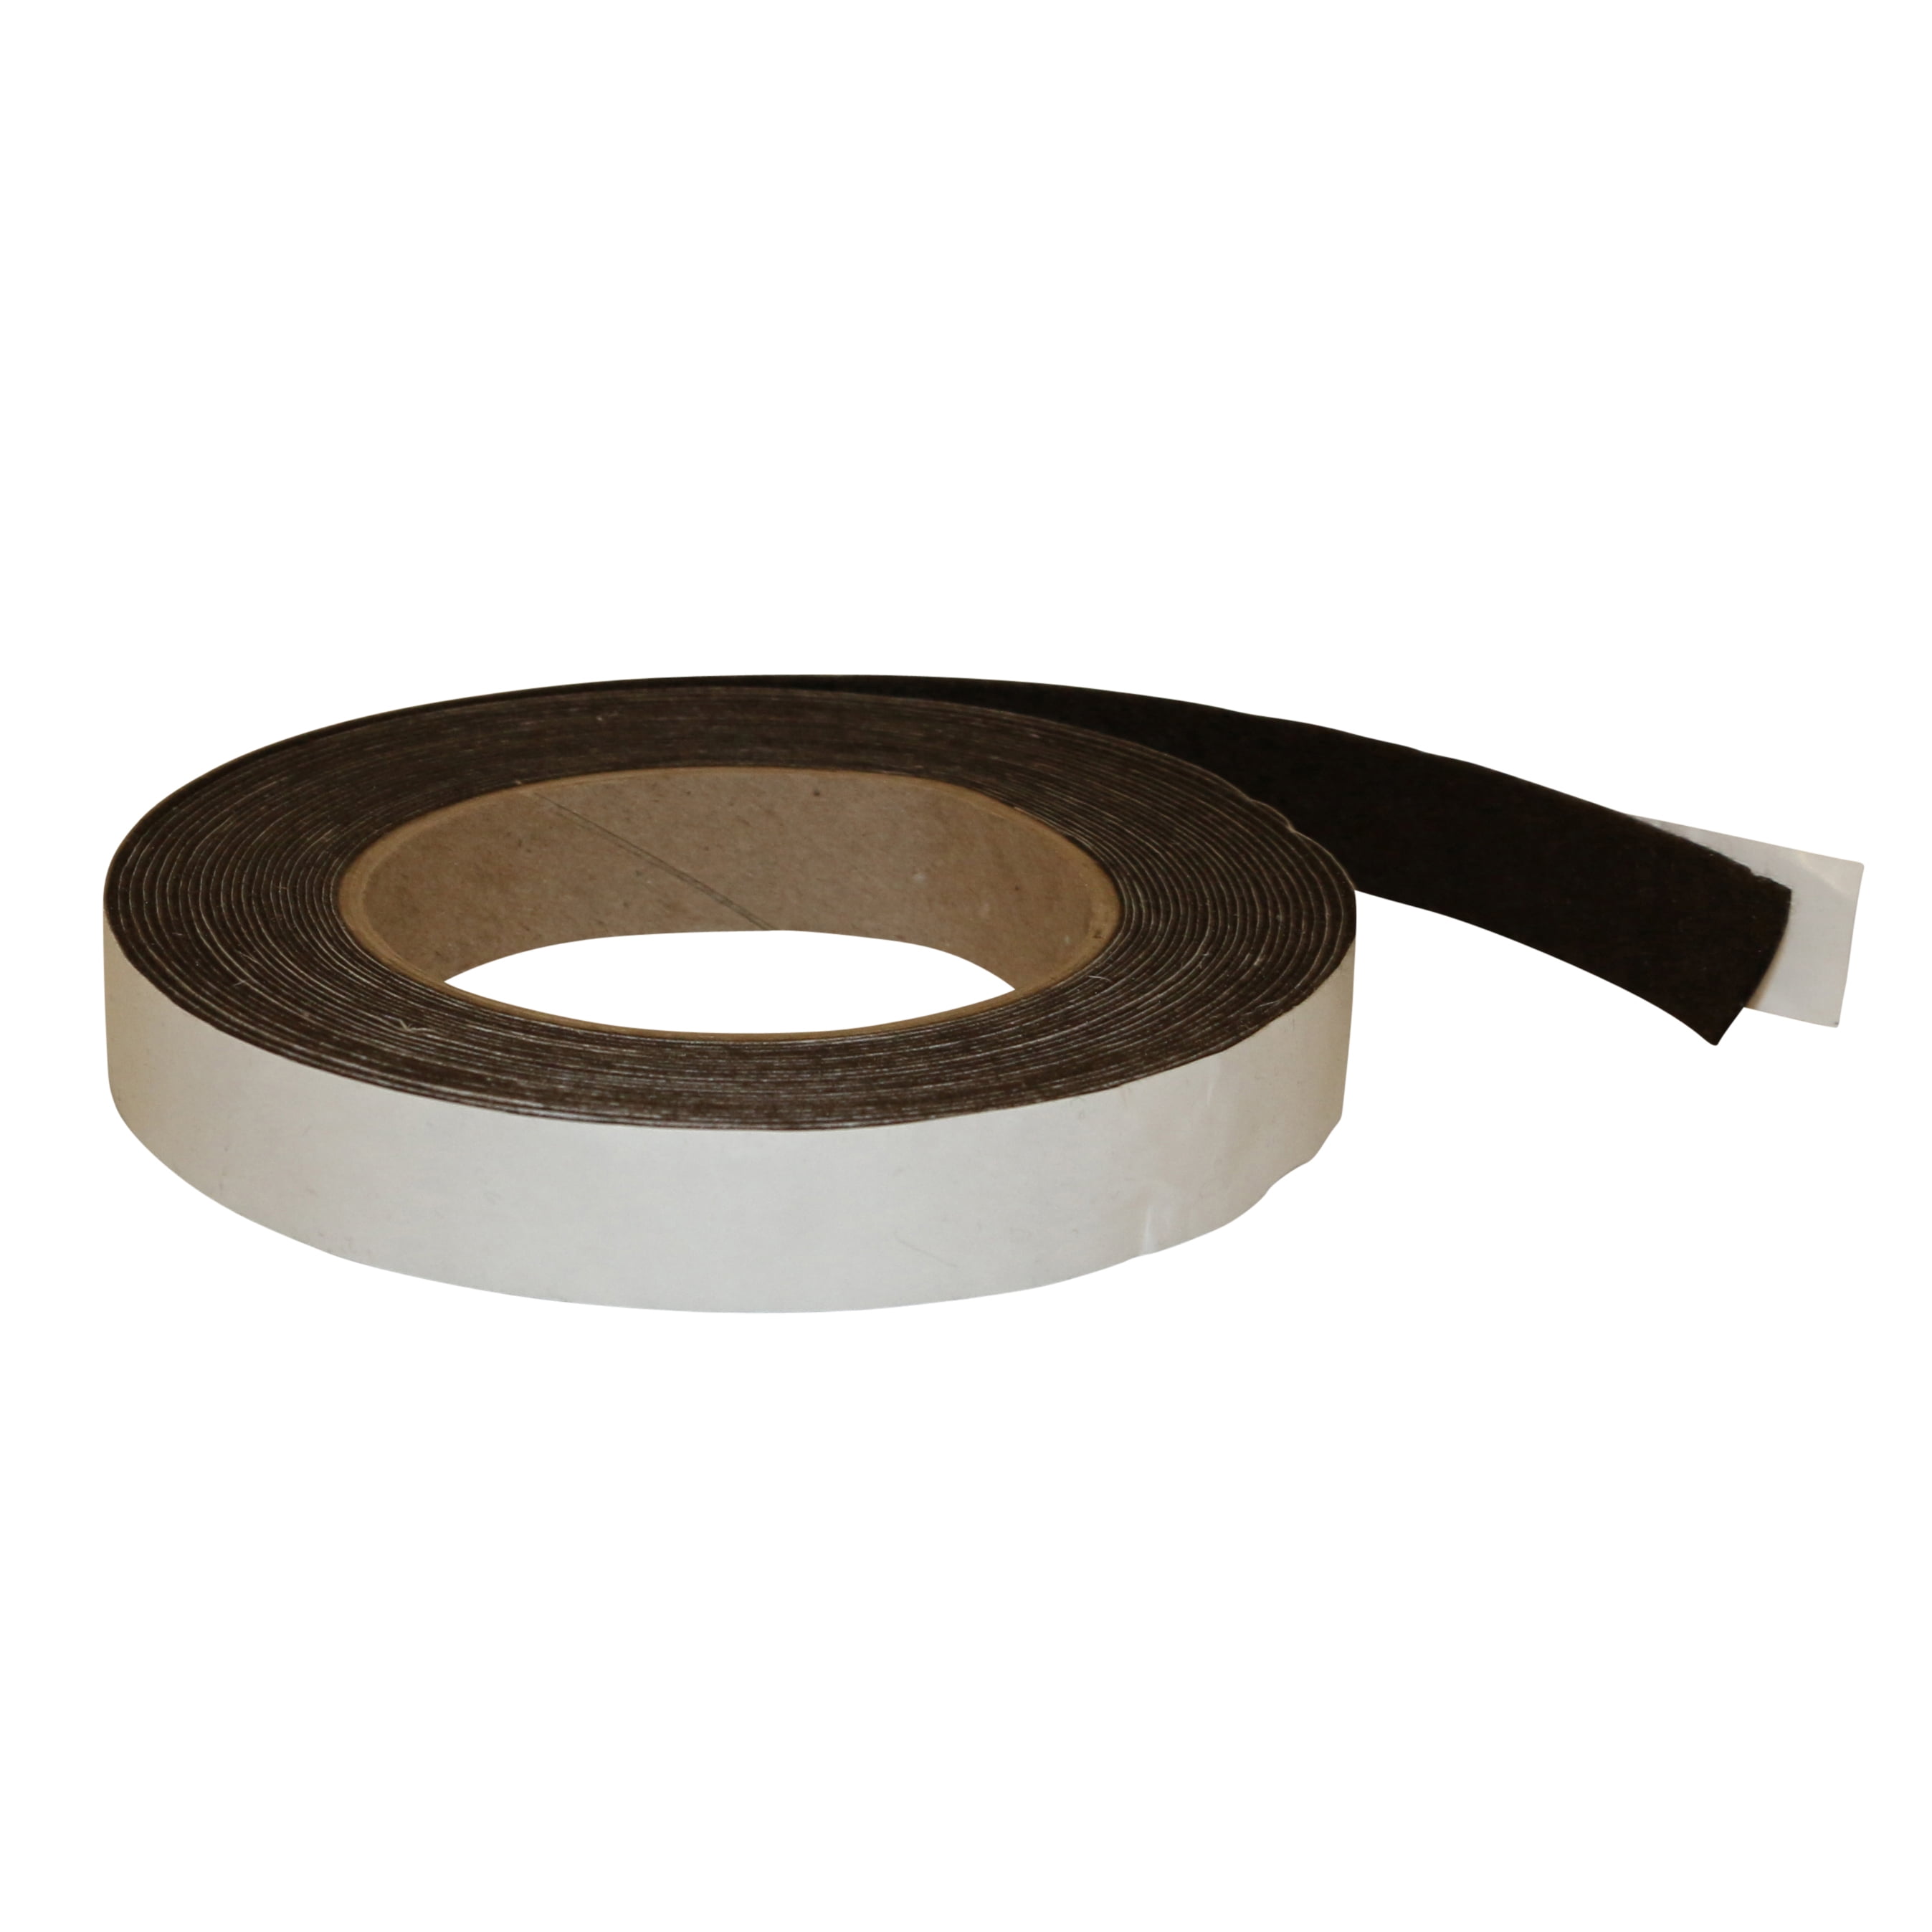 JVCC Acrylic Craft Felt Tape [1mm thick felt] (ACF-06): 3/4 in. x 25 ft.  (Dark Brown)